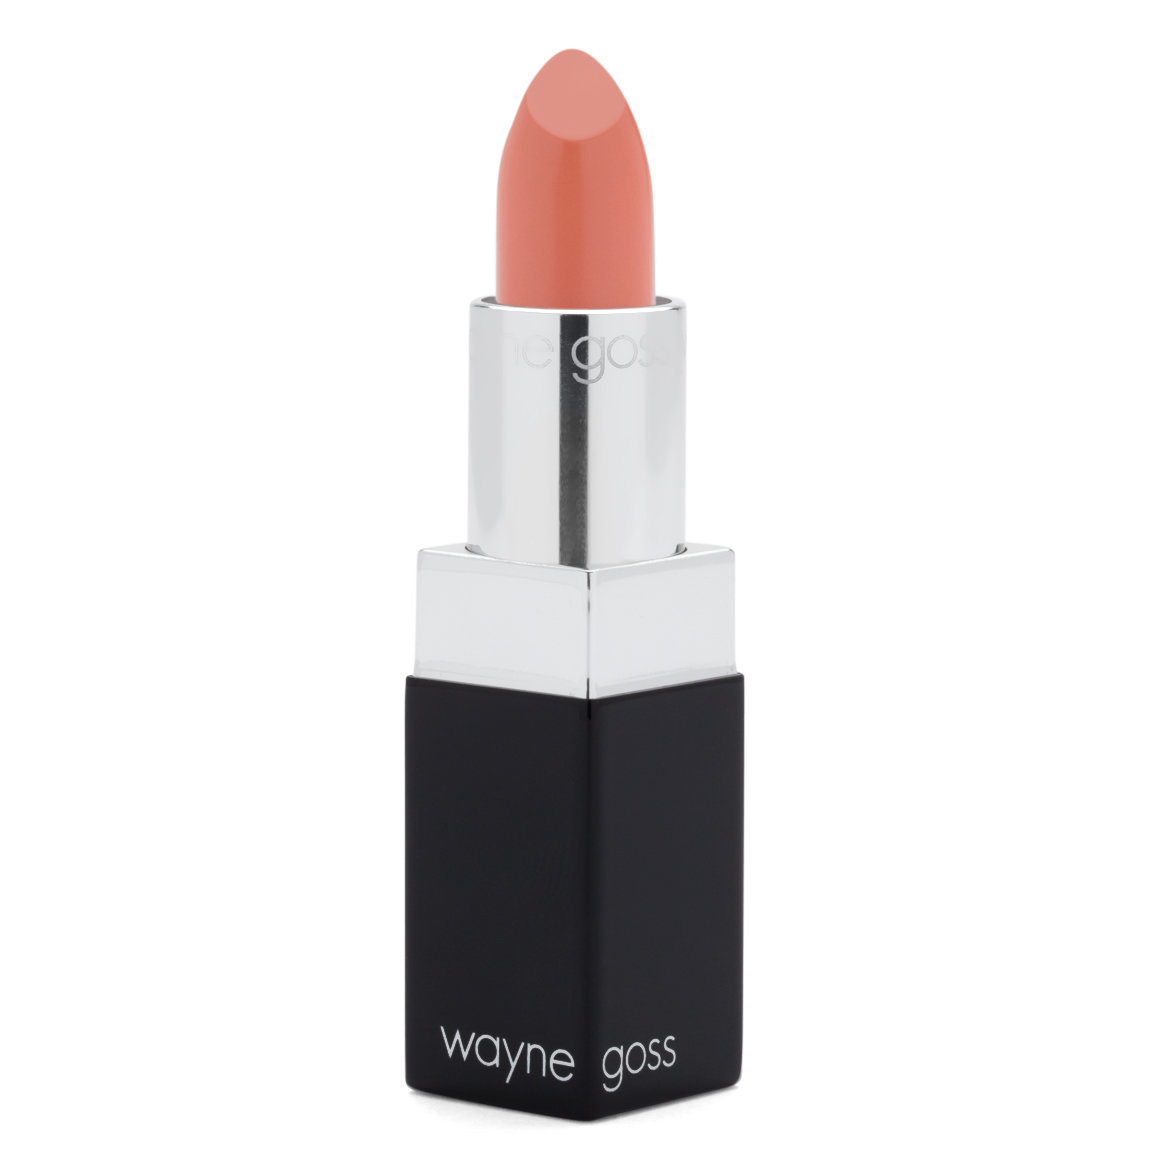 Wayne Goss The Luxury Cream Lipstick Daisy alternative view 1.